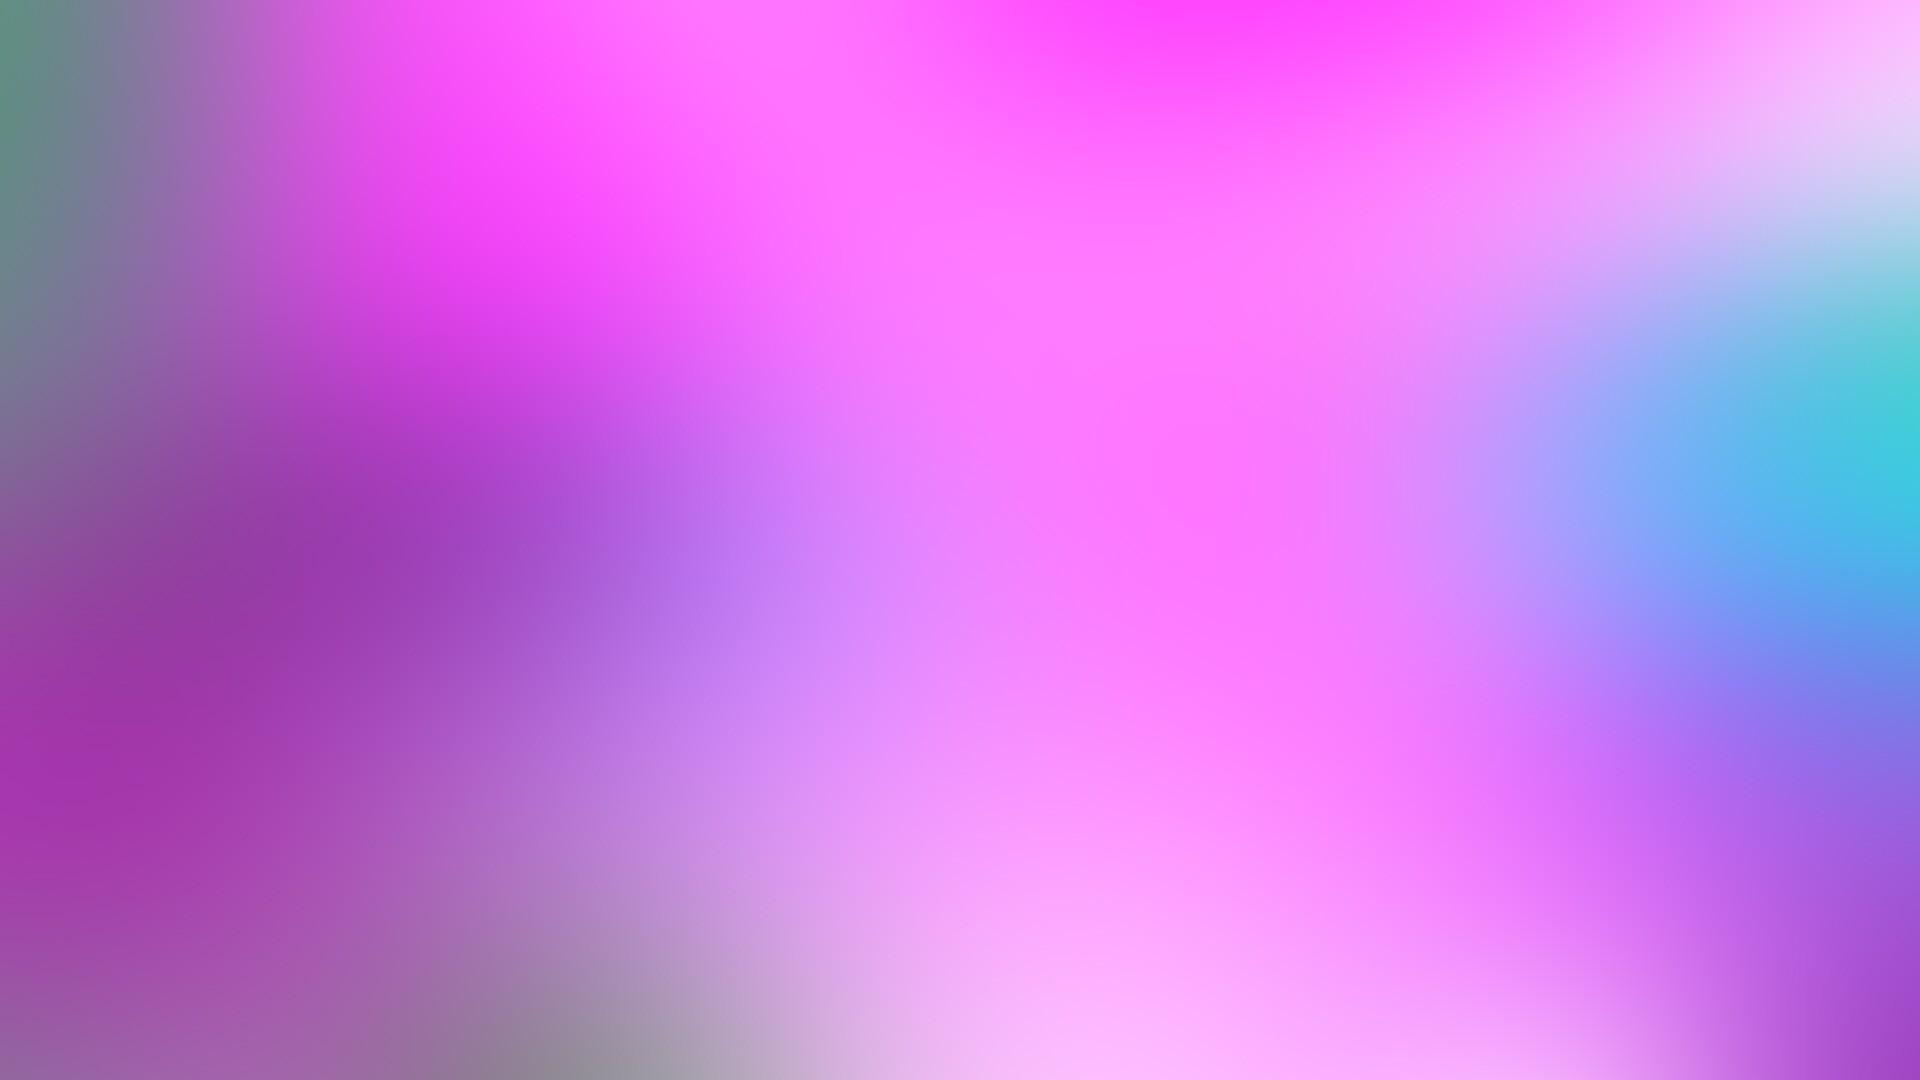 Download Wallpaper Pink, Blue, White, Spot Full HD 1080p .